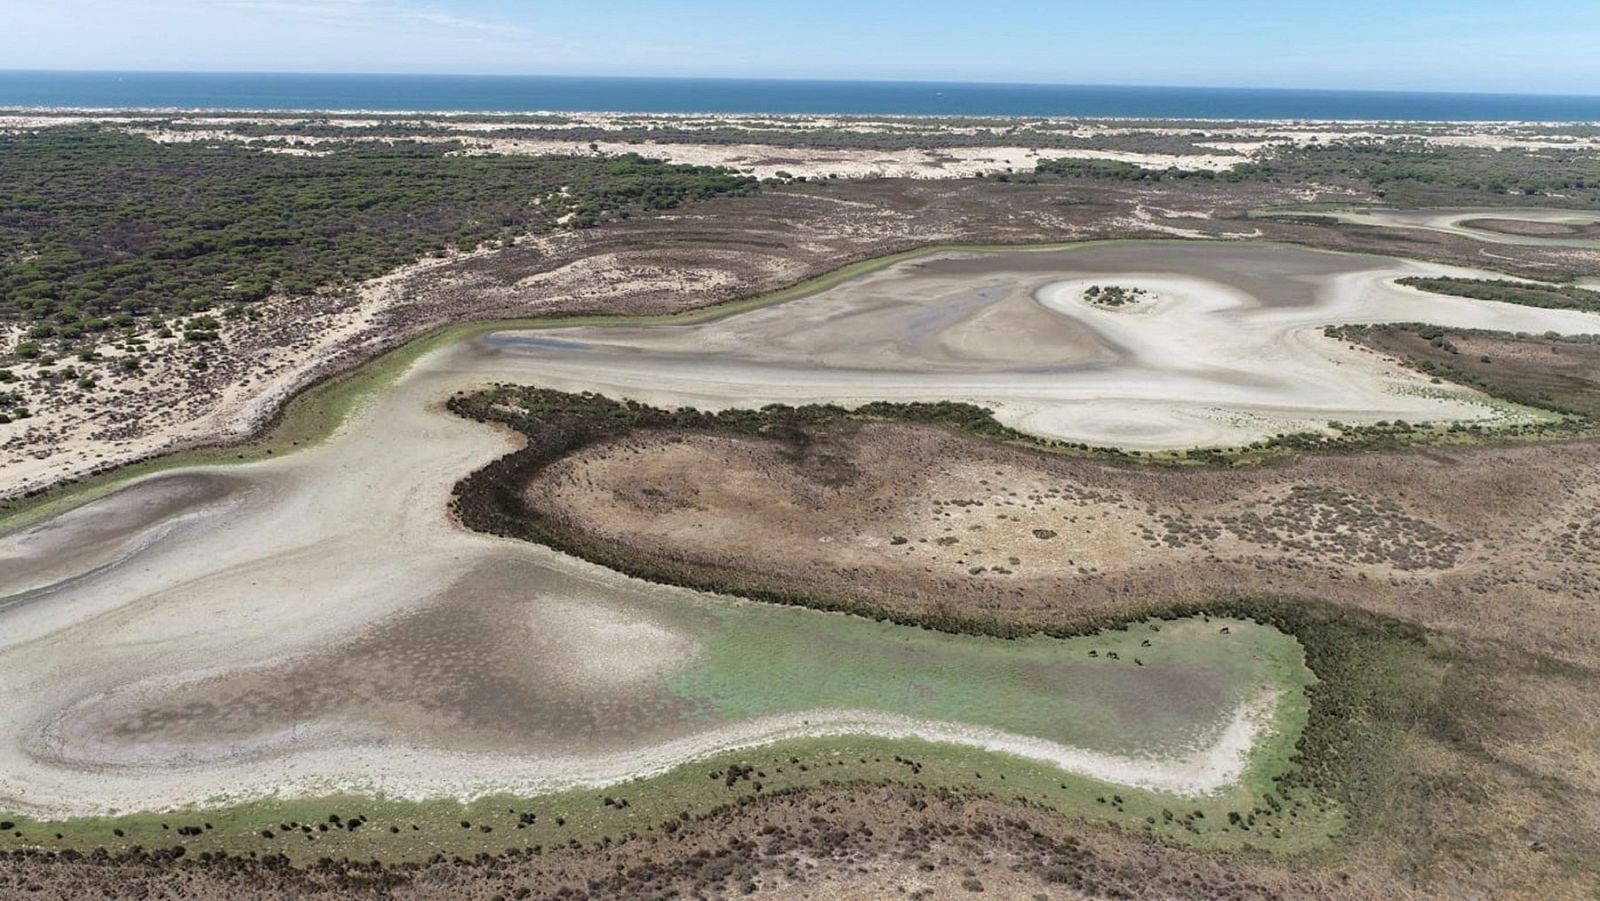 La laguna de Santa Olalla, en Doñana, se seca por tercera vez en su historia